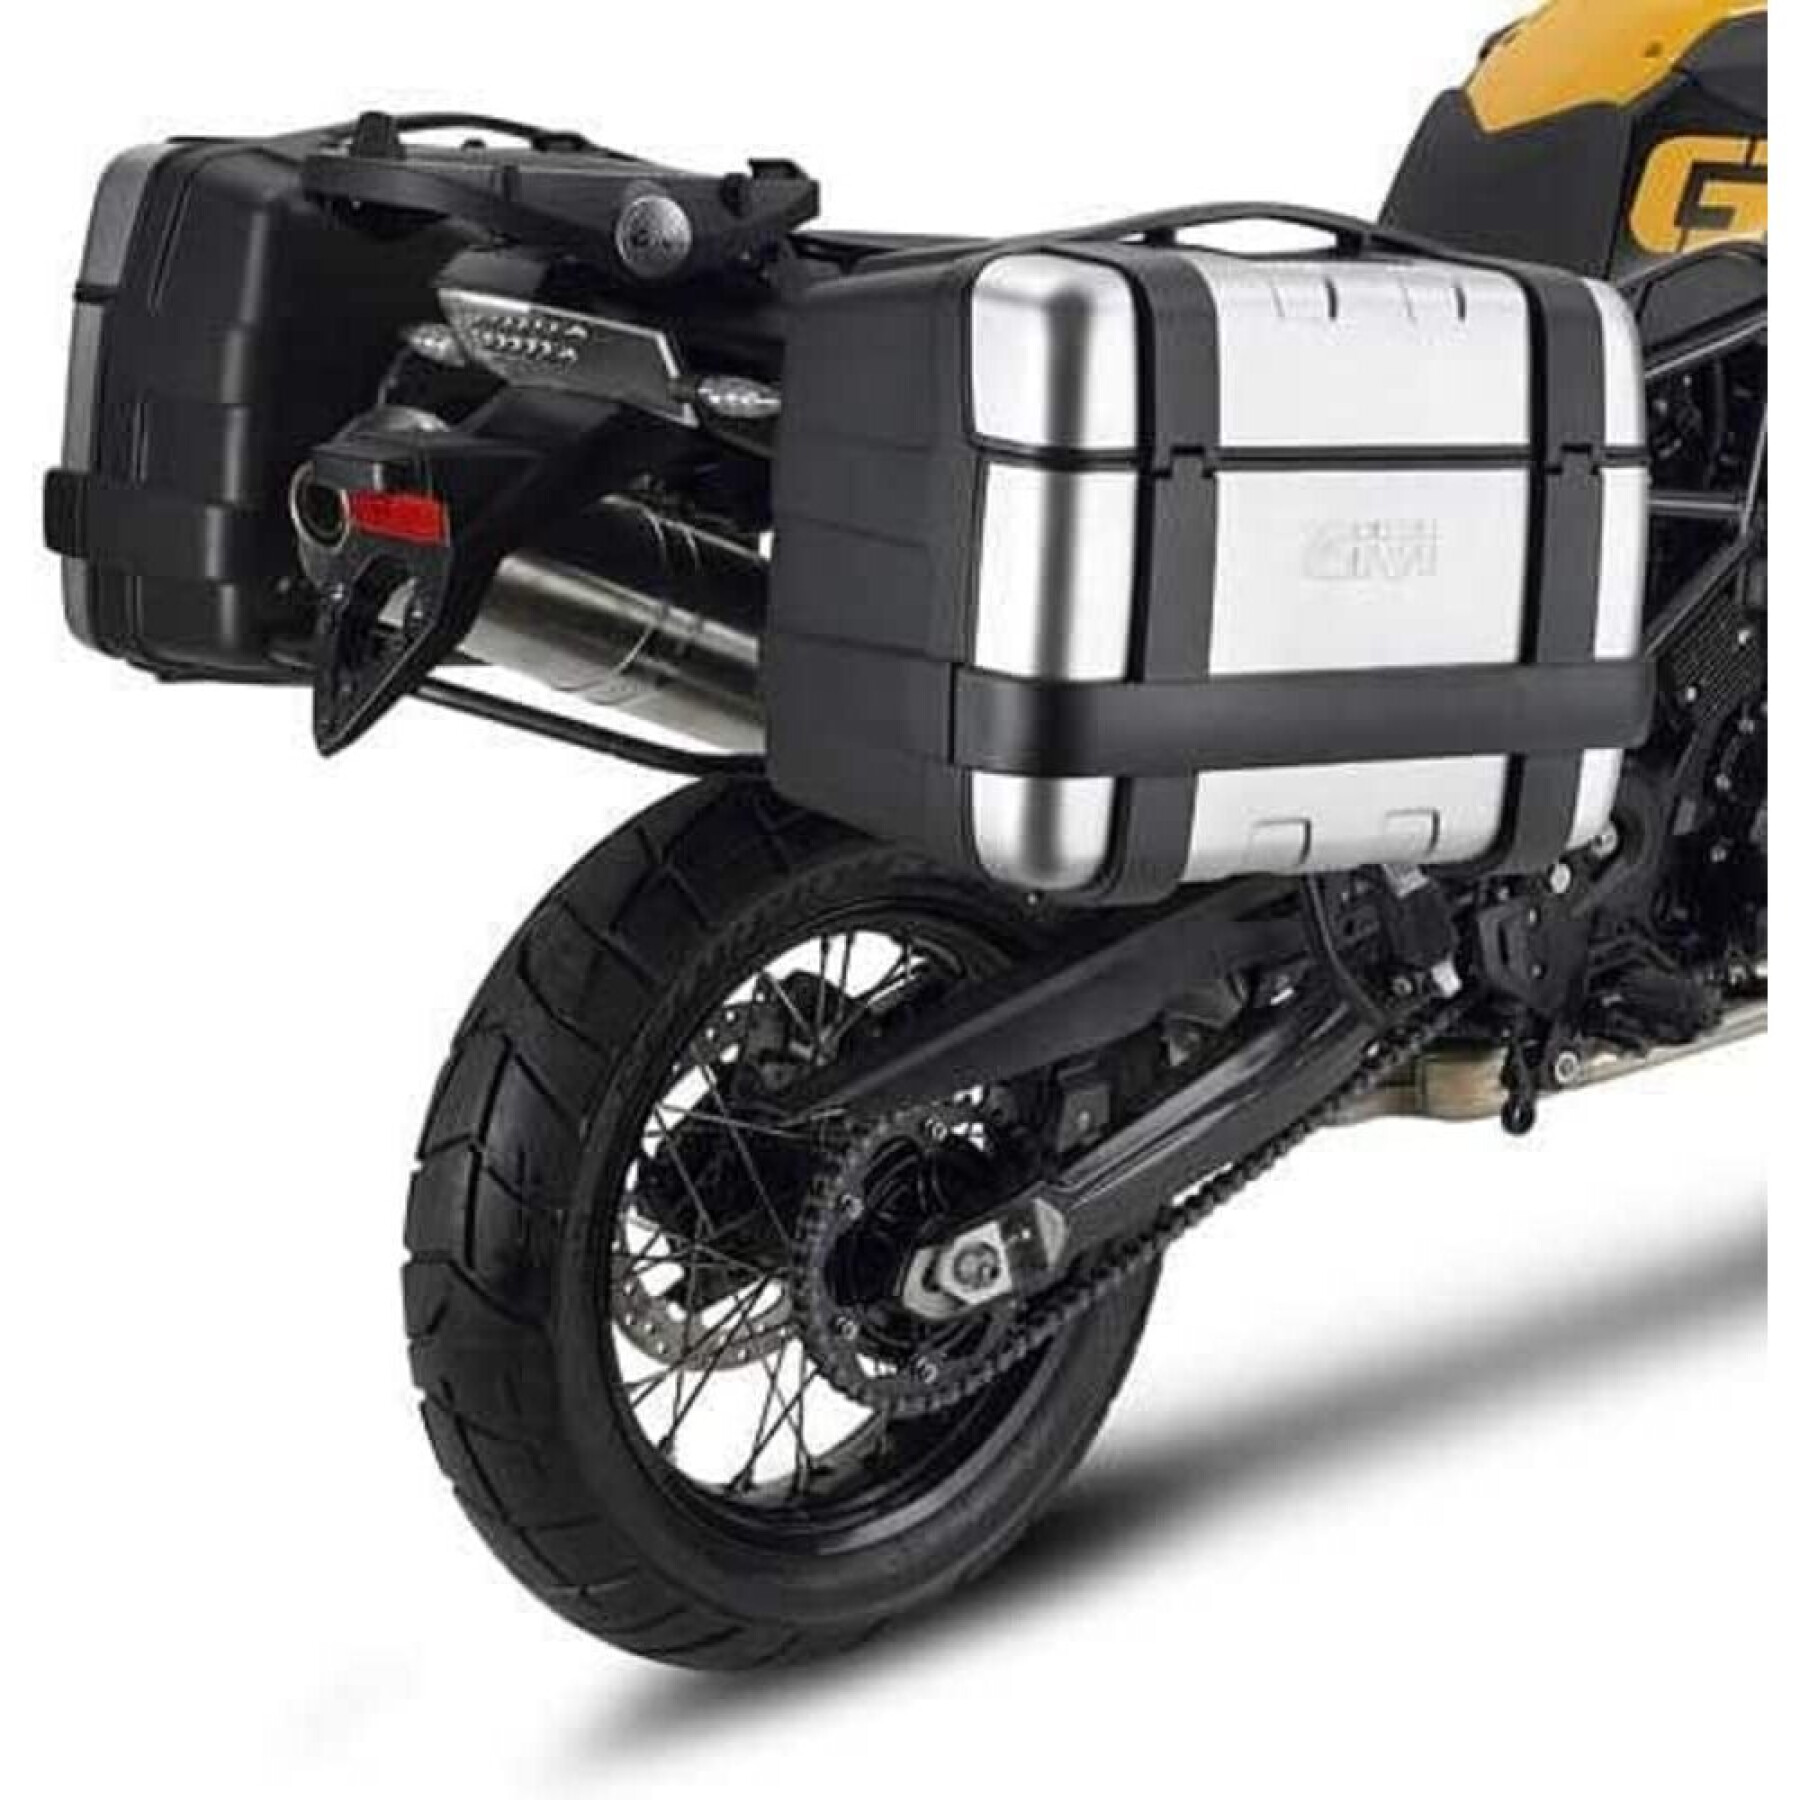 Soporte de la maleta lateral de la moto Givi Monokey Bmw F 650 Gs/F 800 Gs (08 À 17)